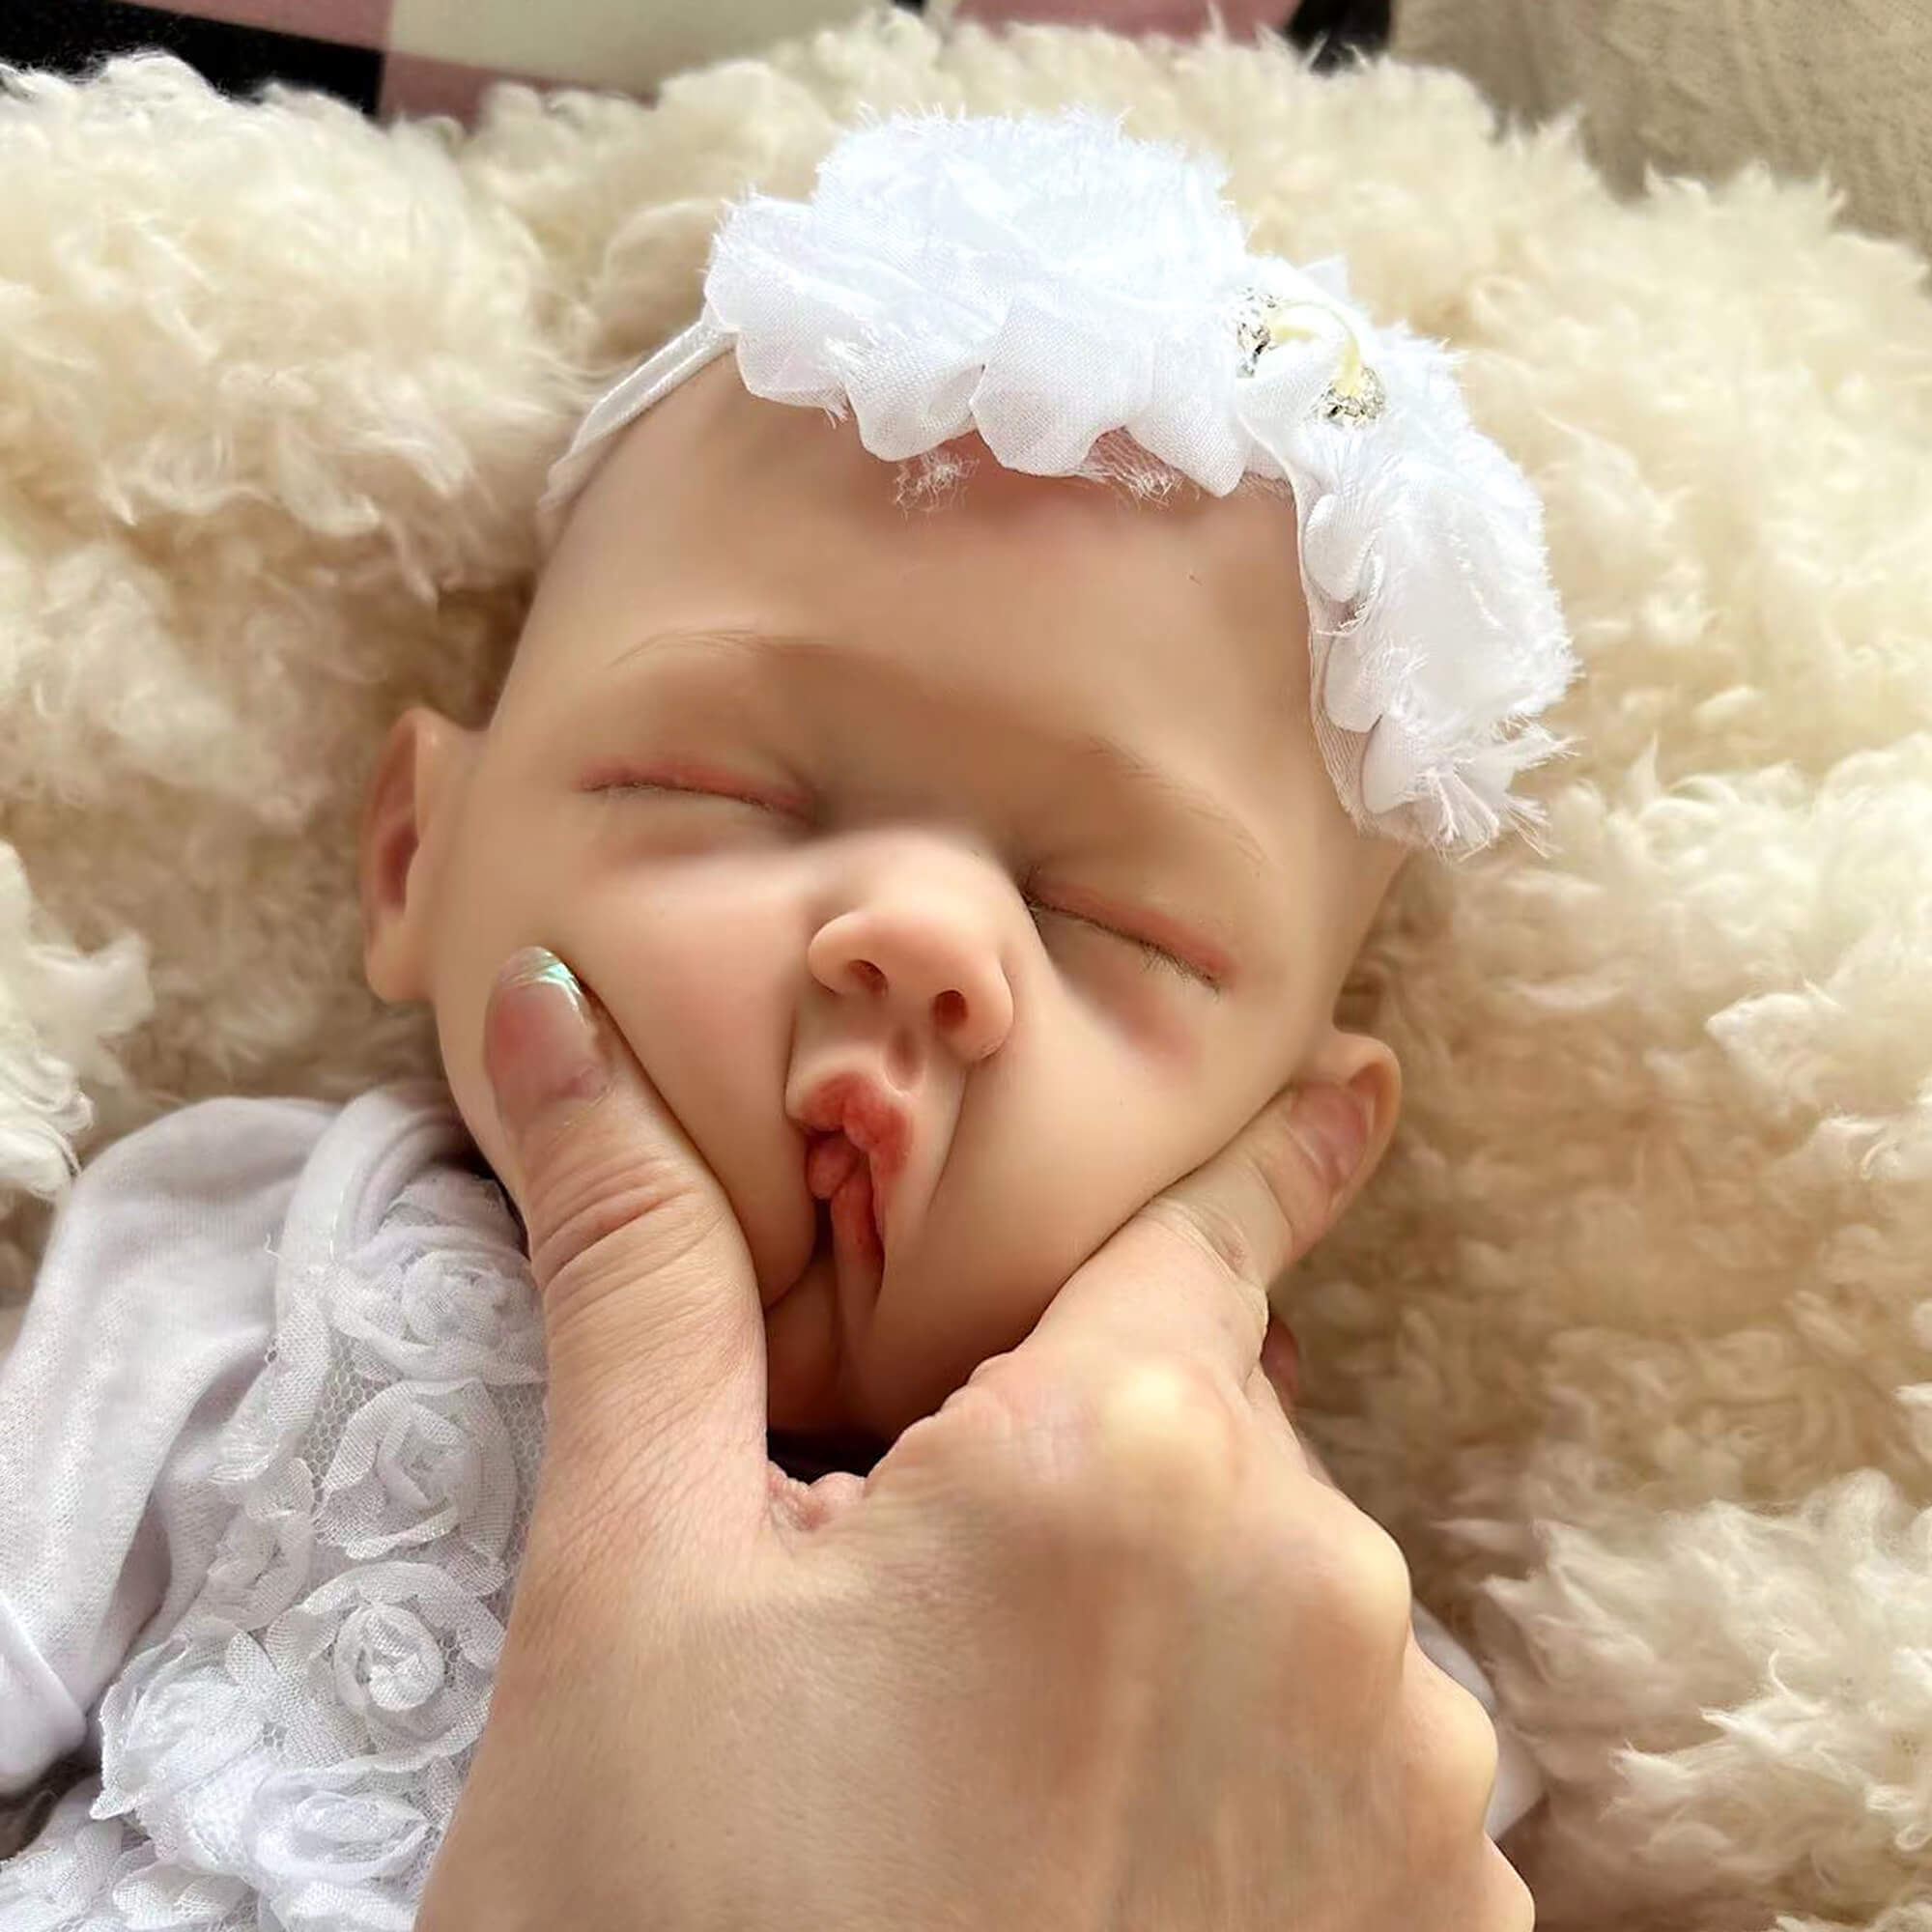 18 inch Realistic Full Silicone Baby Doll,Lifelike Reborn Baby Girl